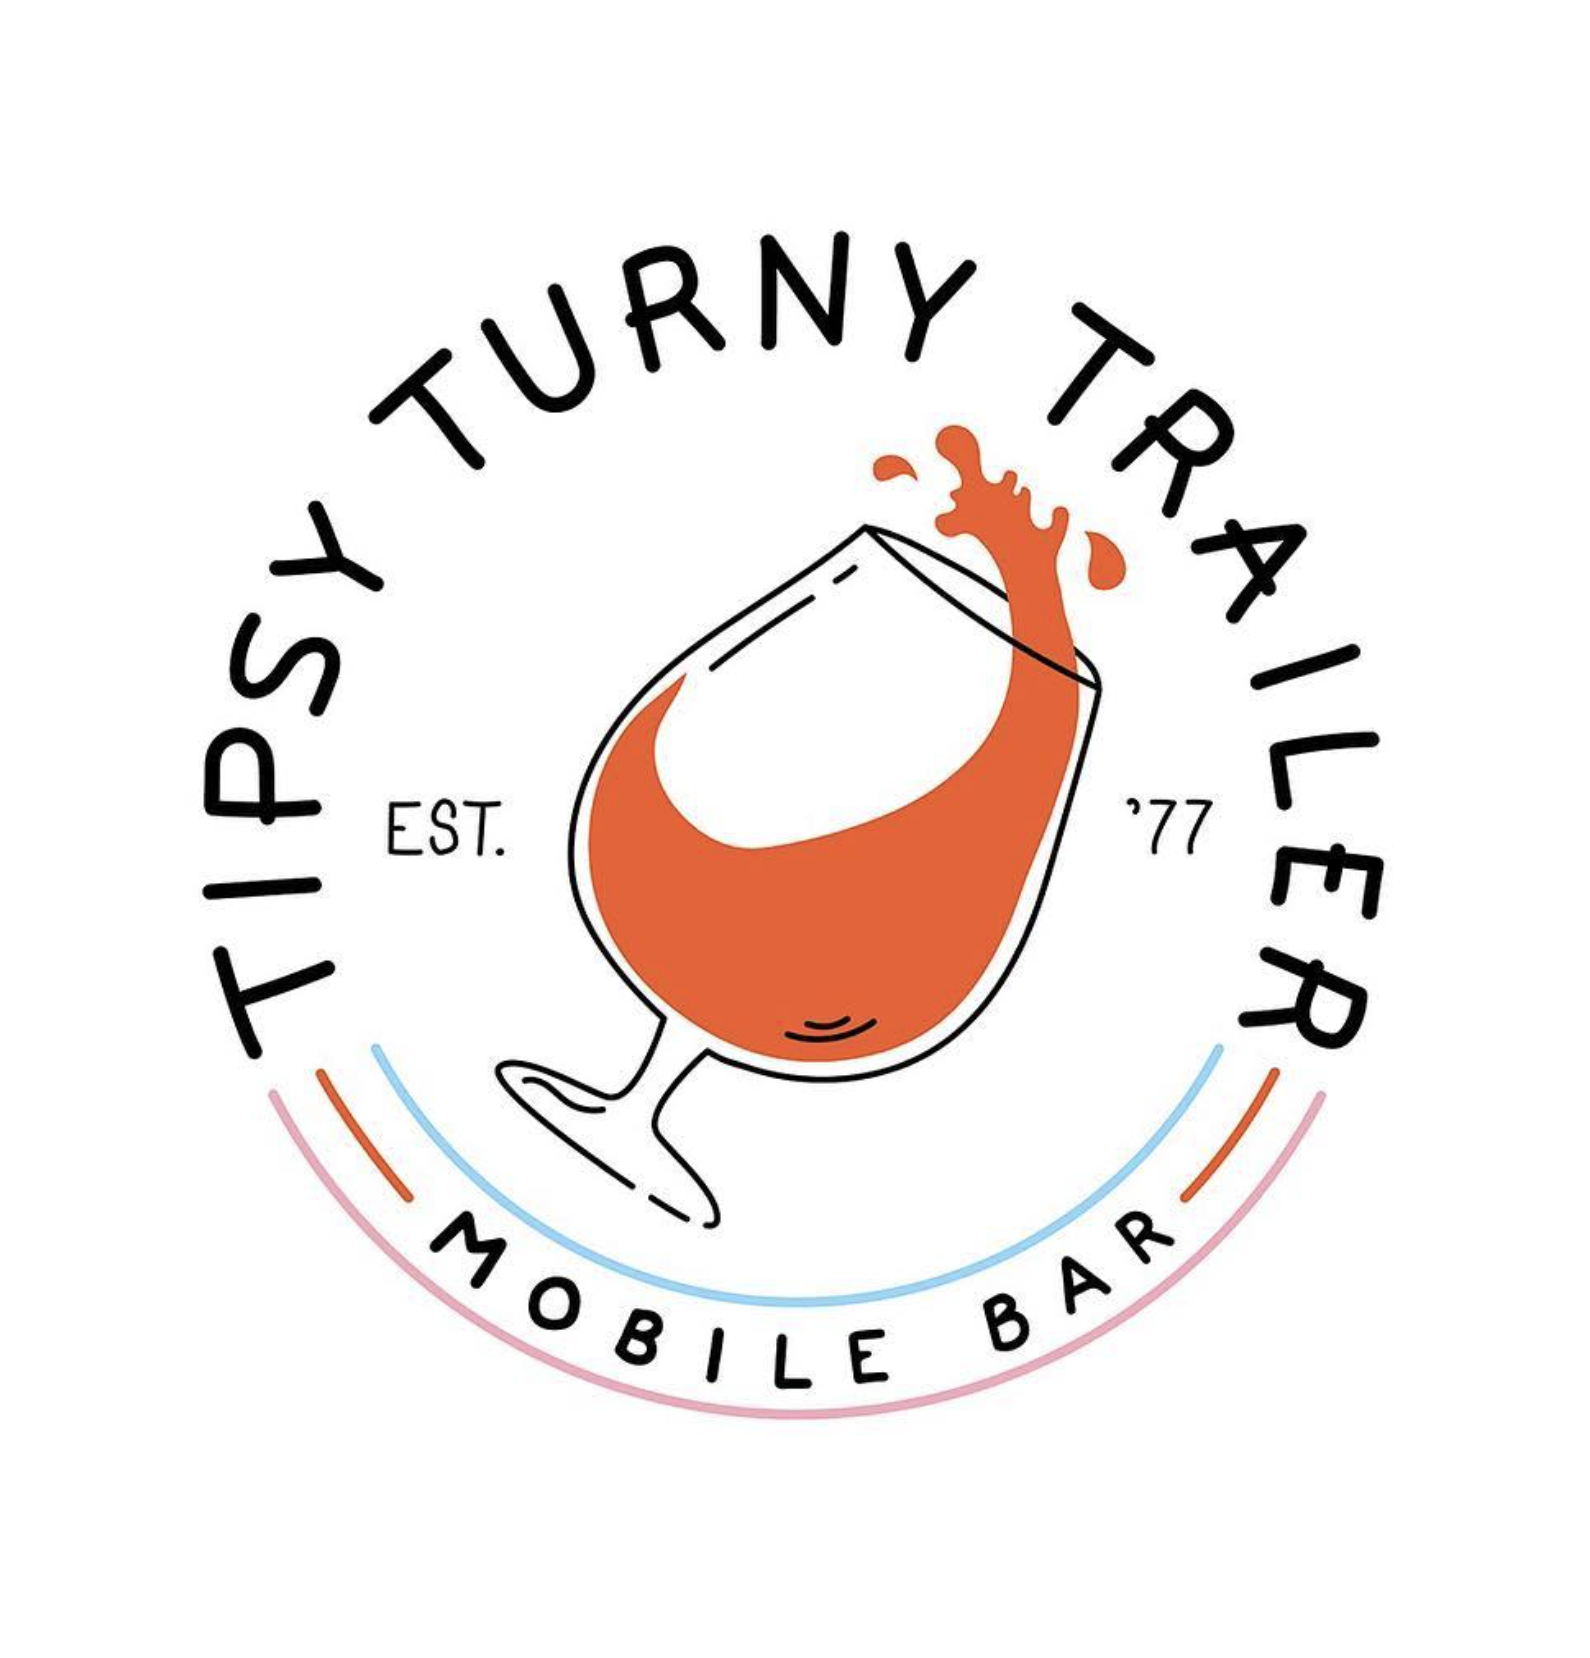 Tipsy Turny Trailer - Mobile Bar